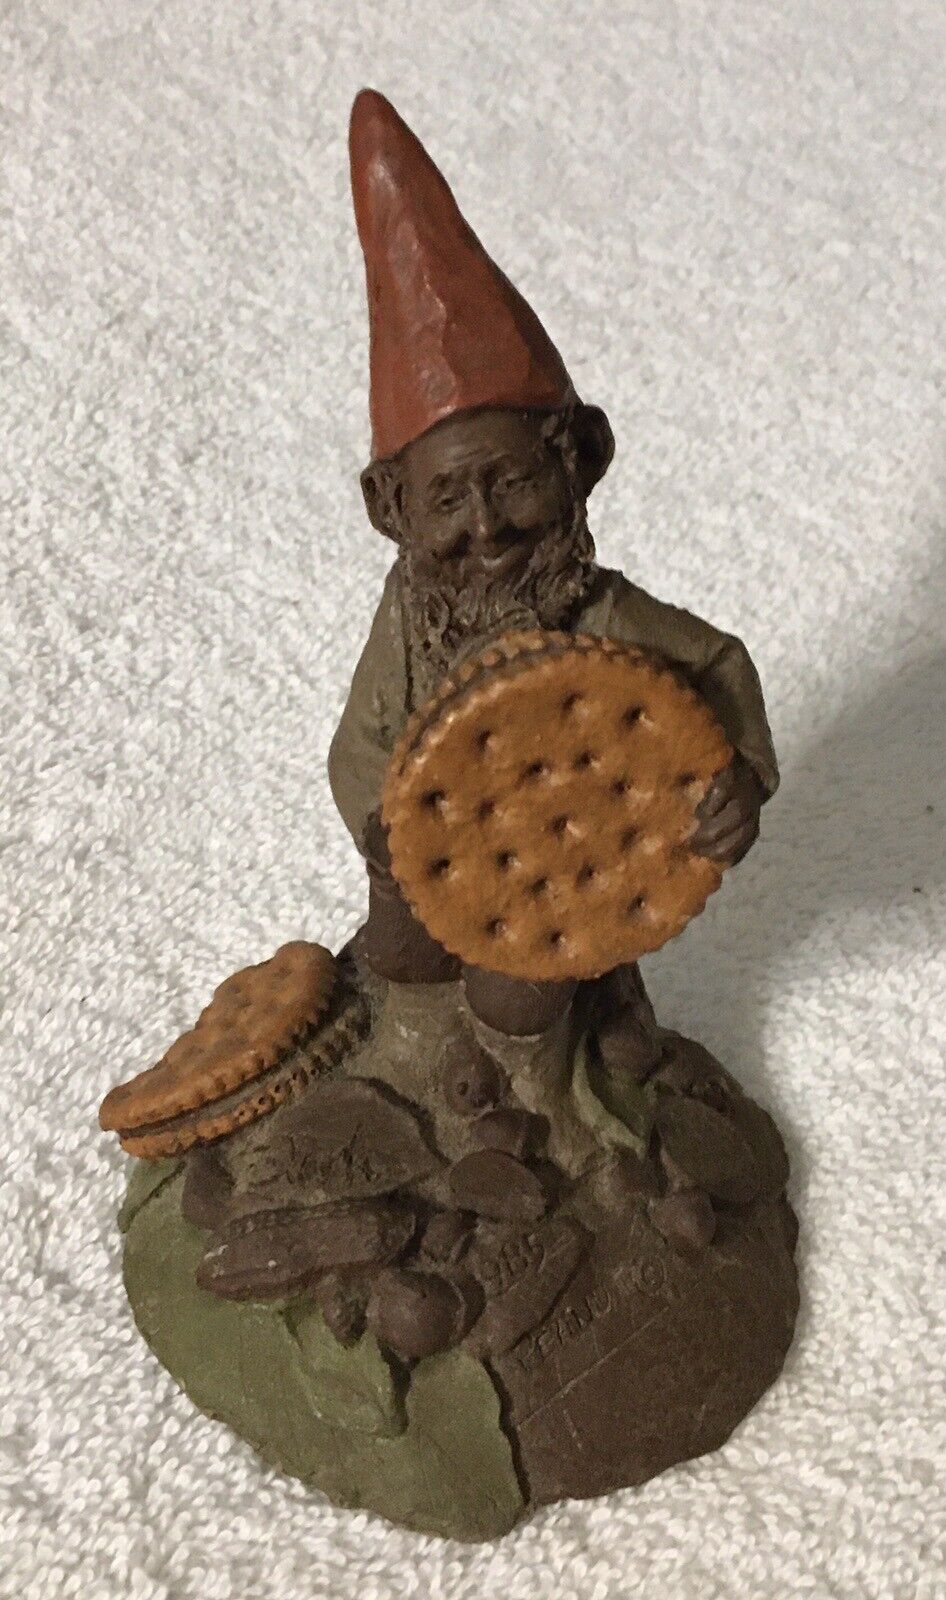 1985 Tom Clark gnome “PEANUT” carrying peanut cracker EUC